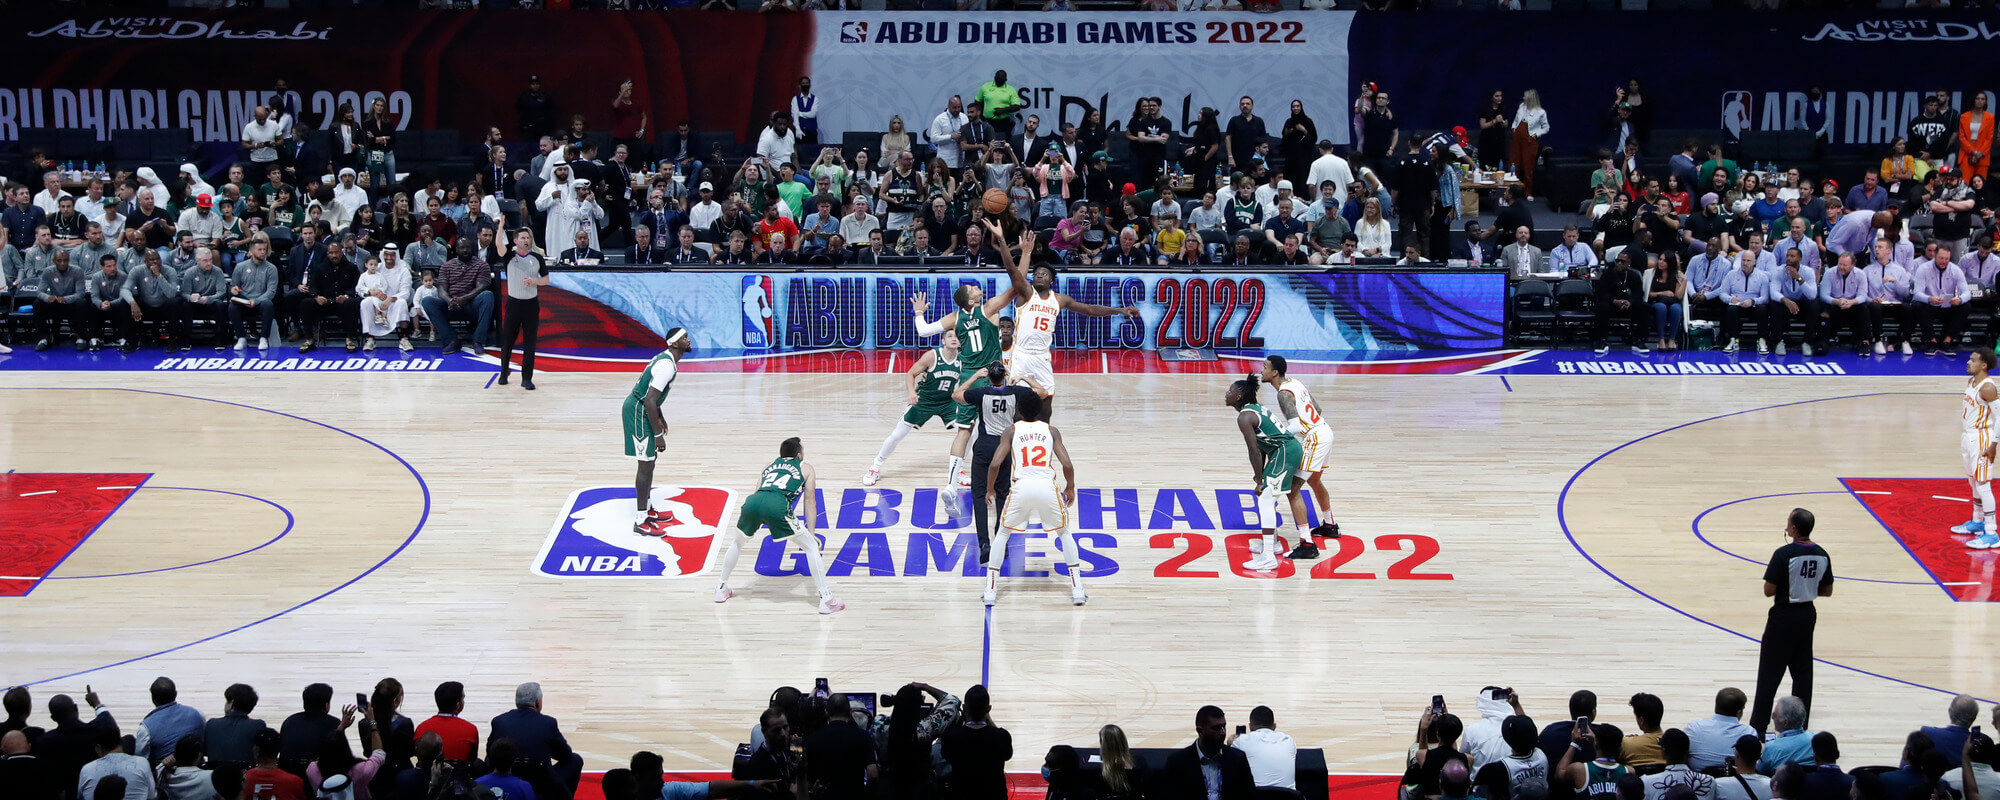 NBA Abu Dhabi Games 2023